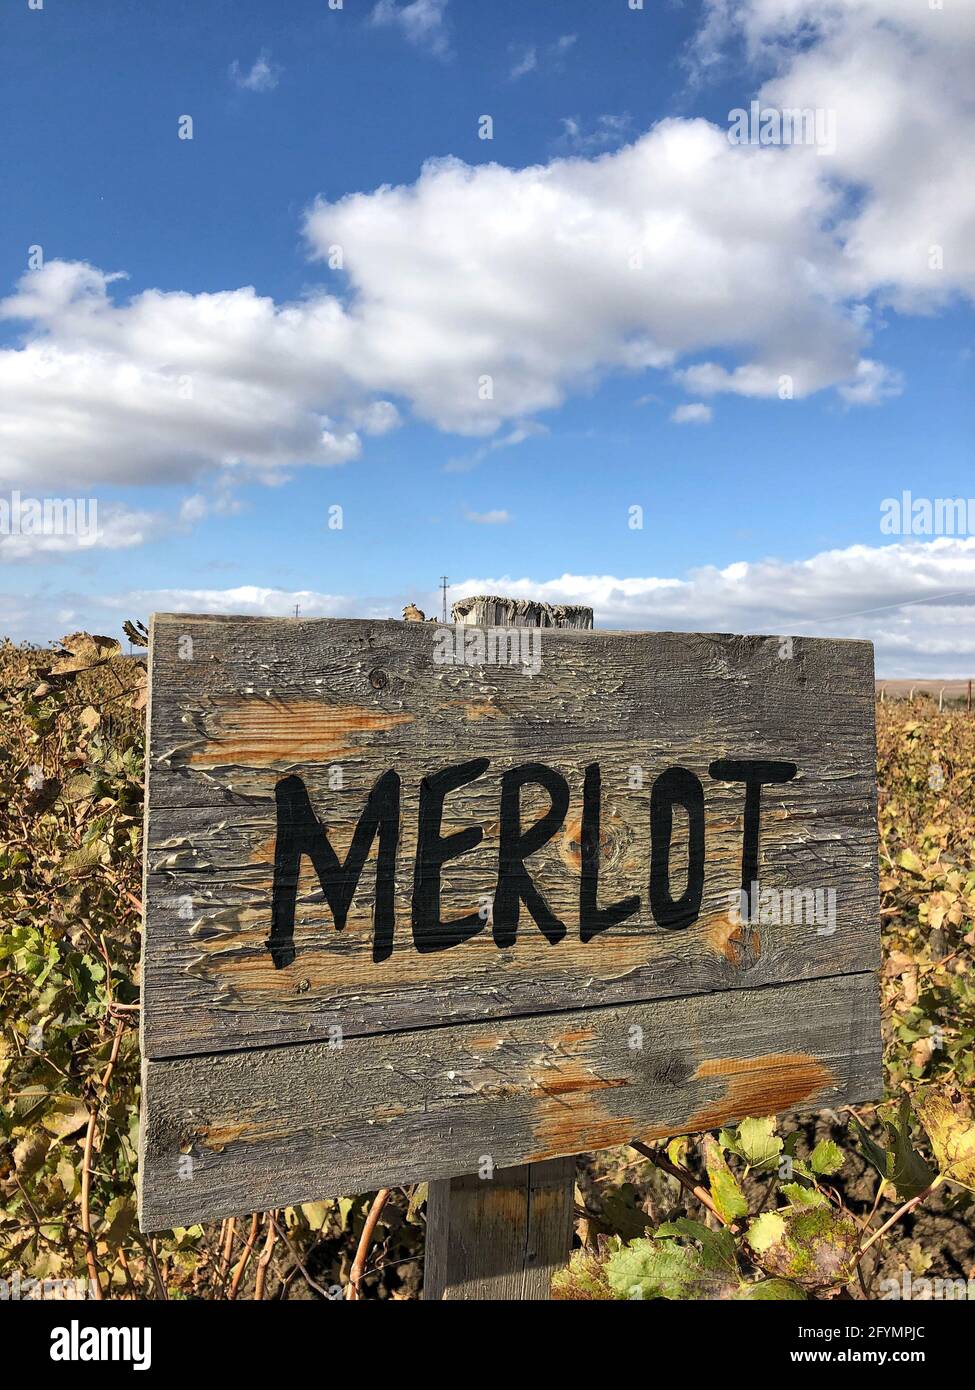 Merlot segno in un vigneto sotto un bel cielo Foto Stock